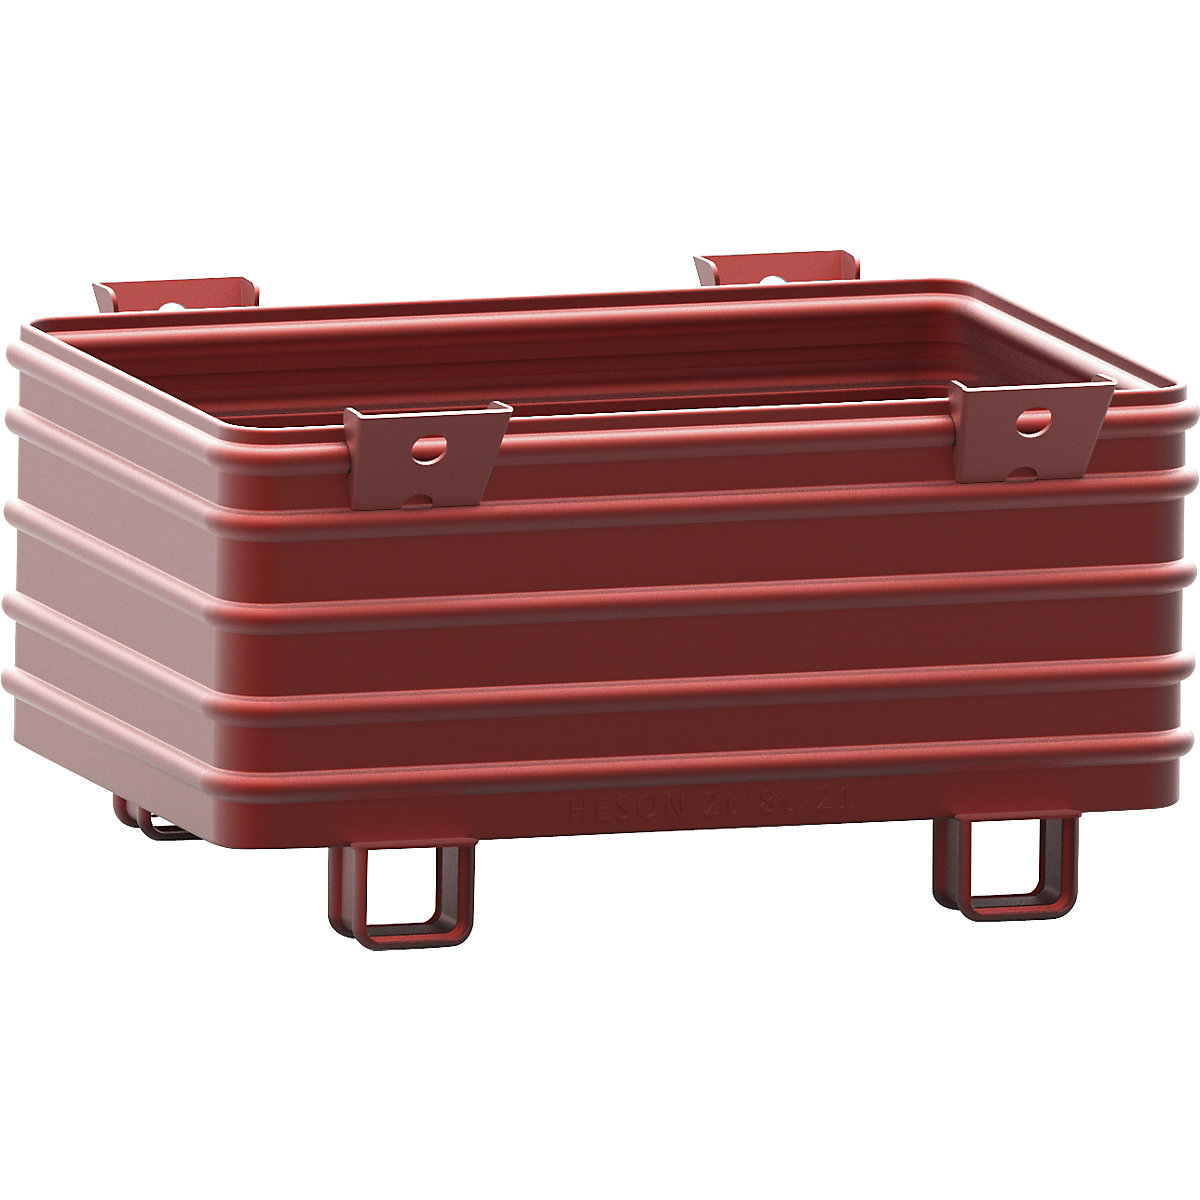 Contenitore impilabile per carichi pesanti – Heson, largh. x lungh. 800 x 1200 mm, con piedini a U, verniciatura in rosso, a partire da 1 pz.